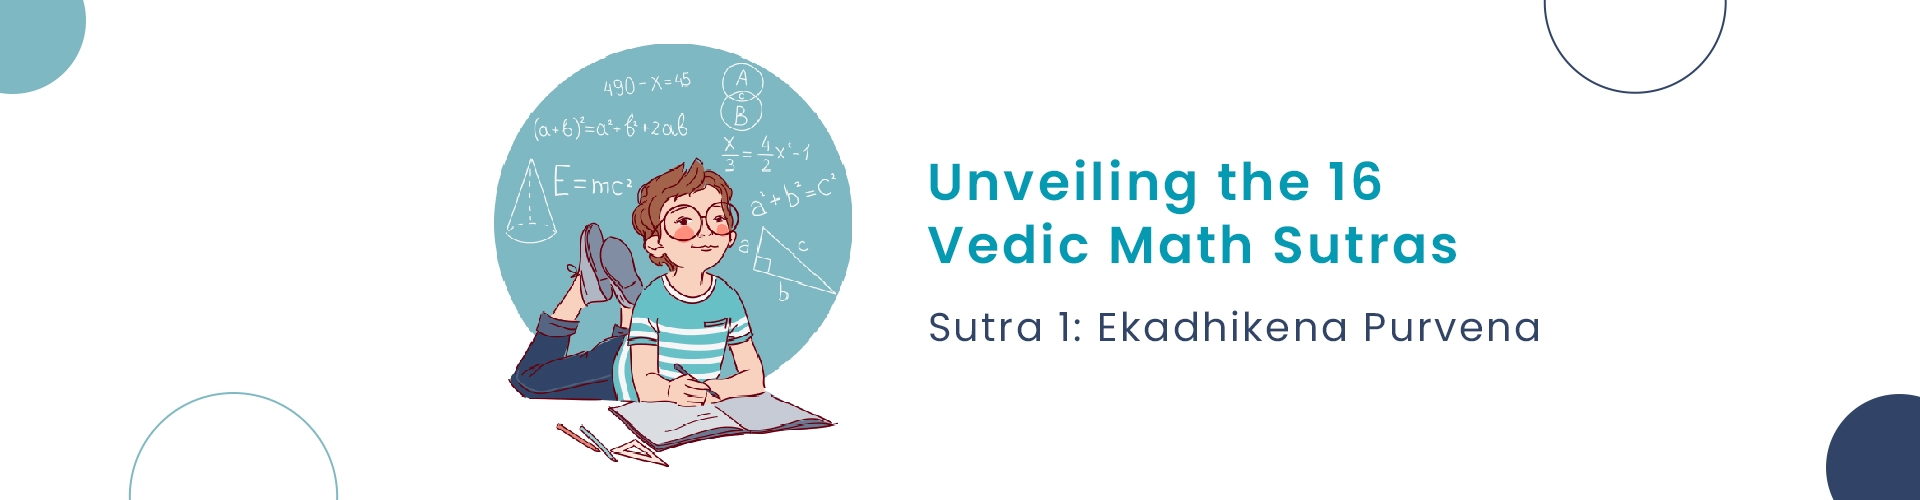 Vedic Math Sutras 1: Ekadhikena Purvena